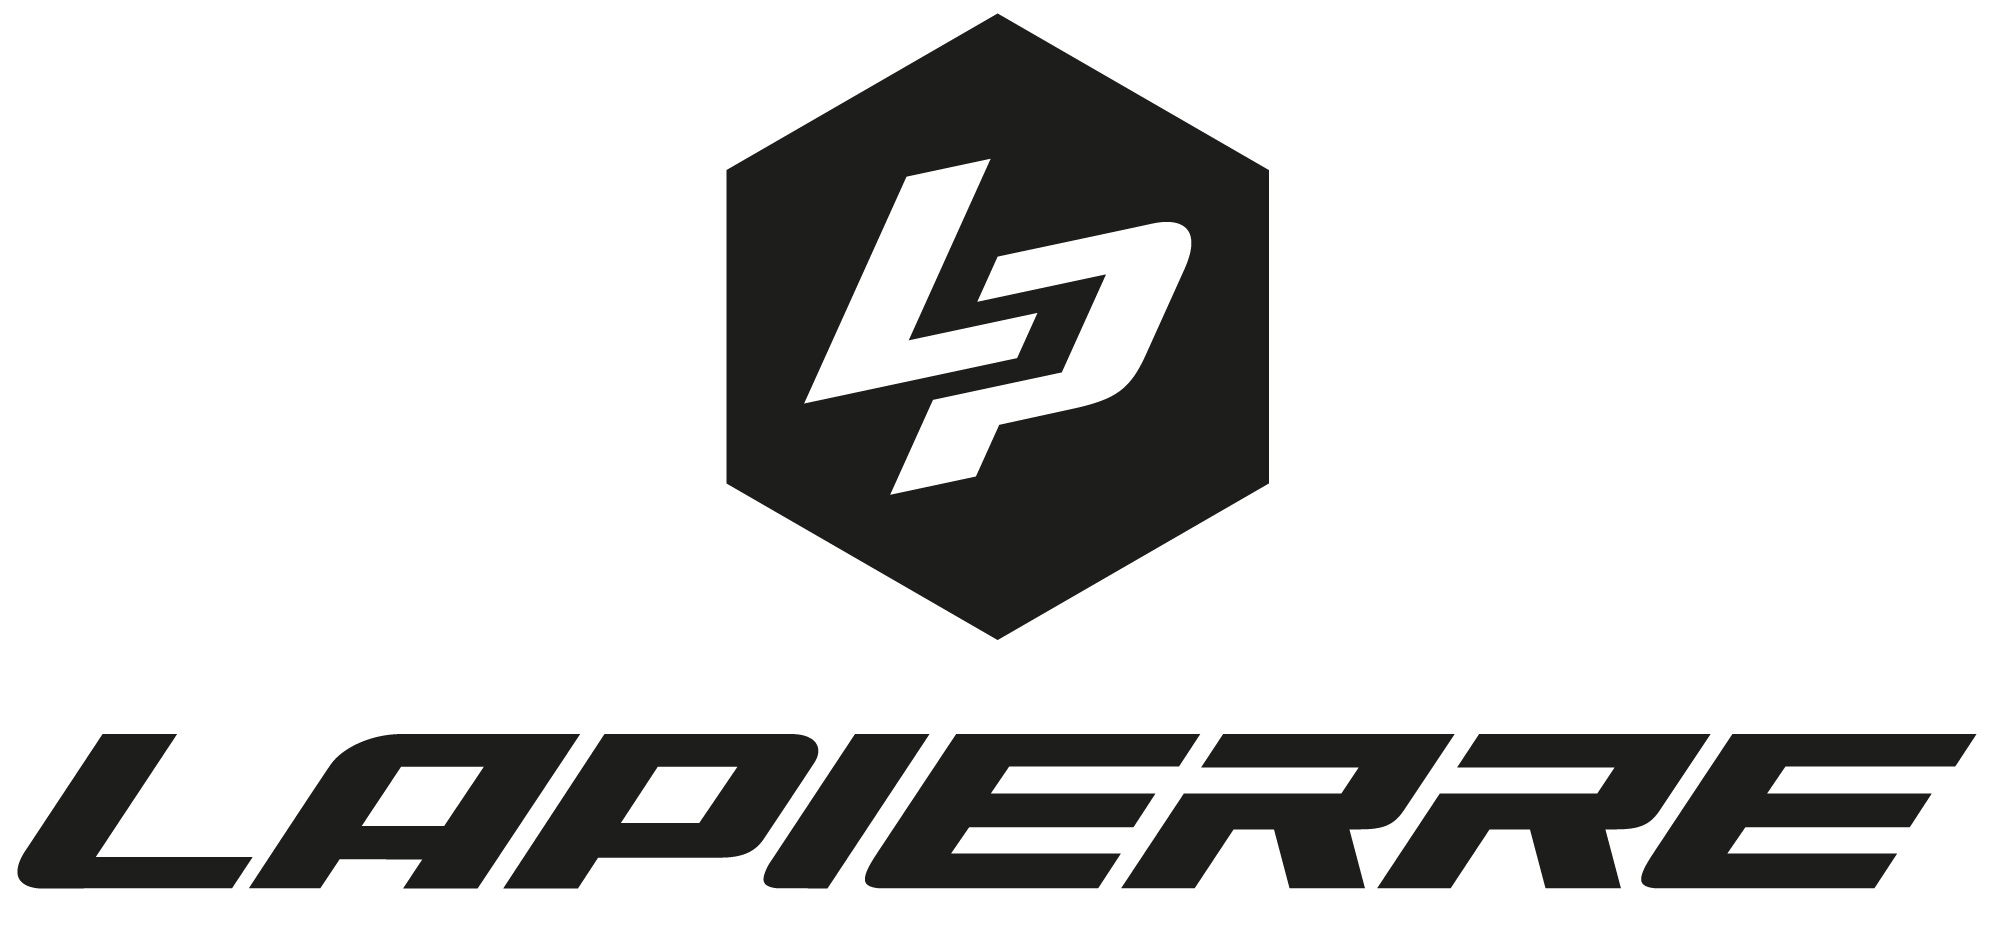 Lapierre logo